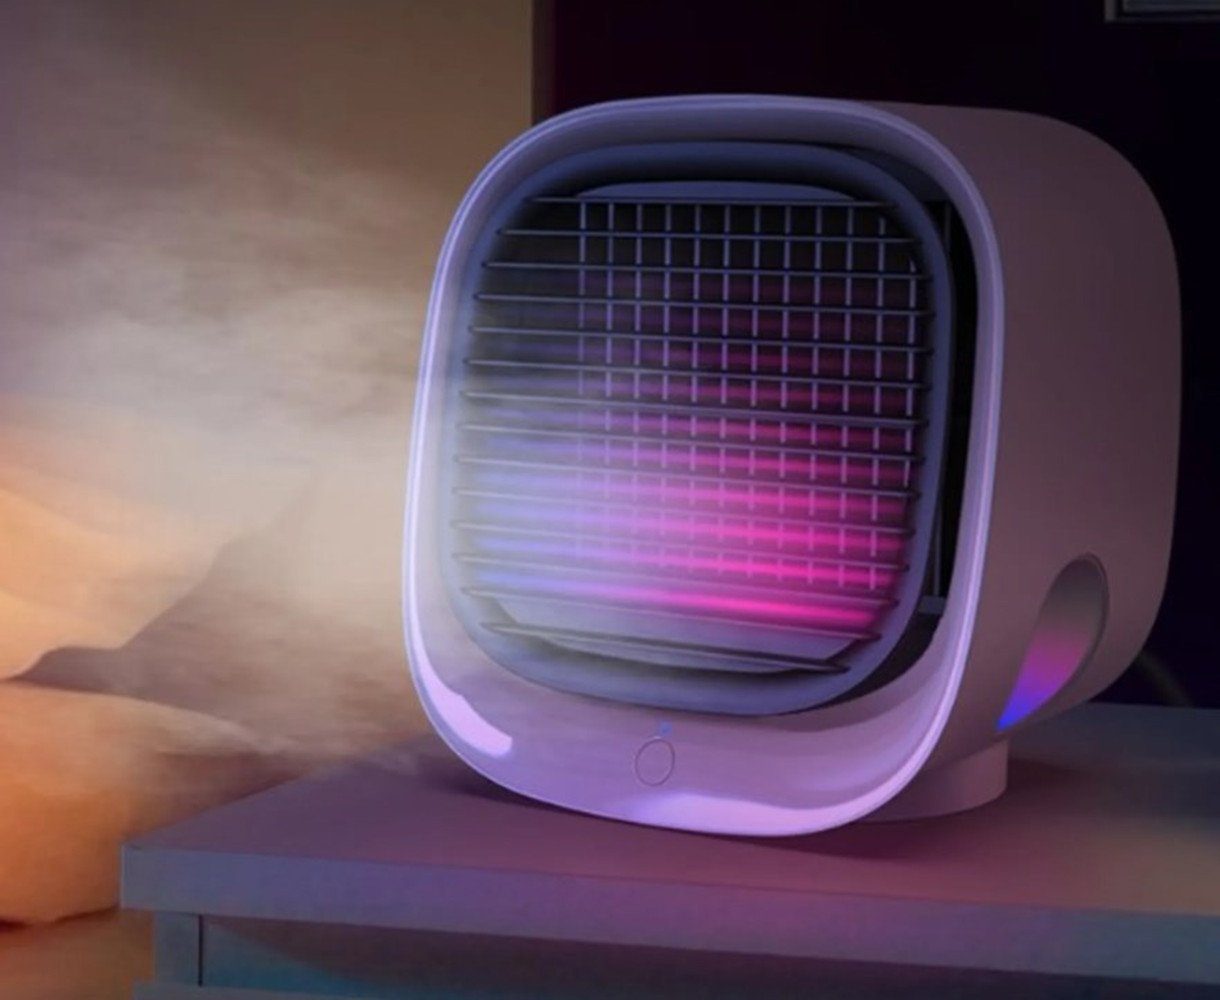 XDeer Designheizkörper Mini mit mit Windgeschwindigkeiten,LED Luftkühler Klimageräte,Tragbarer 3, Kühlventilator Lüfter Desktop Wasserkühlung green Mobile